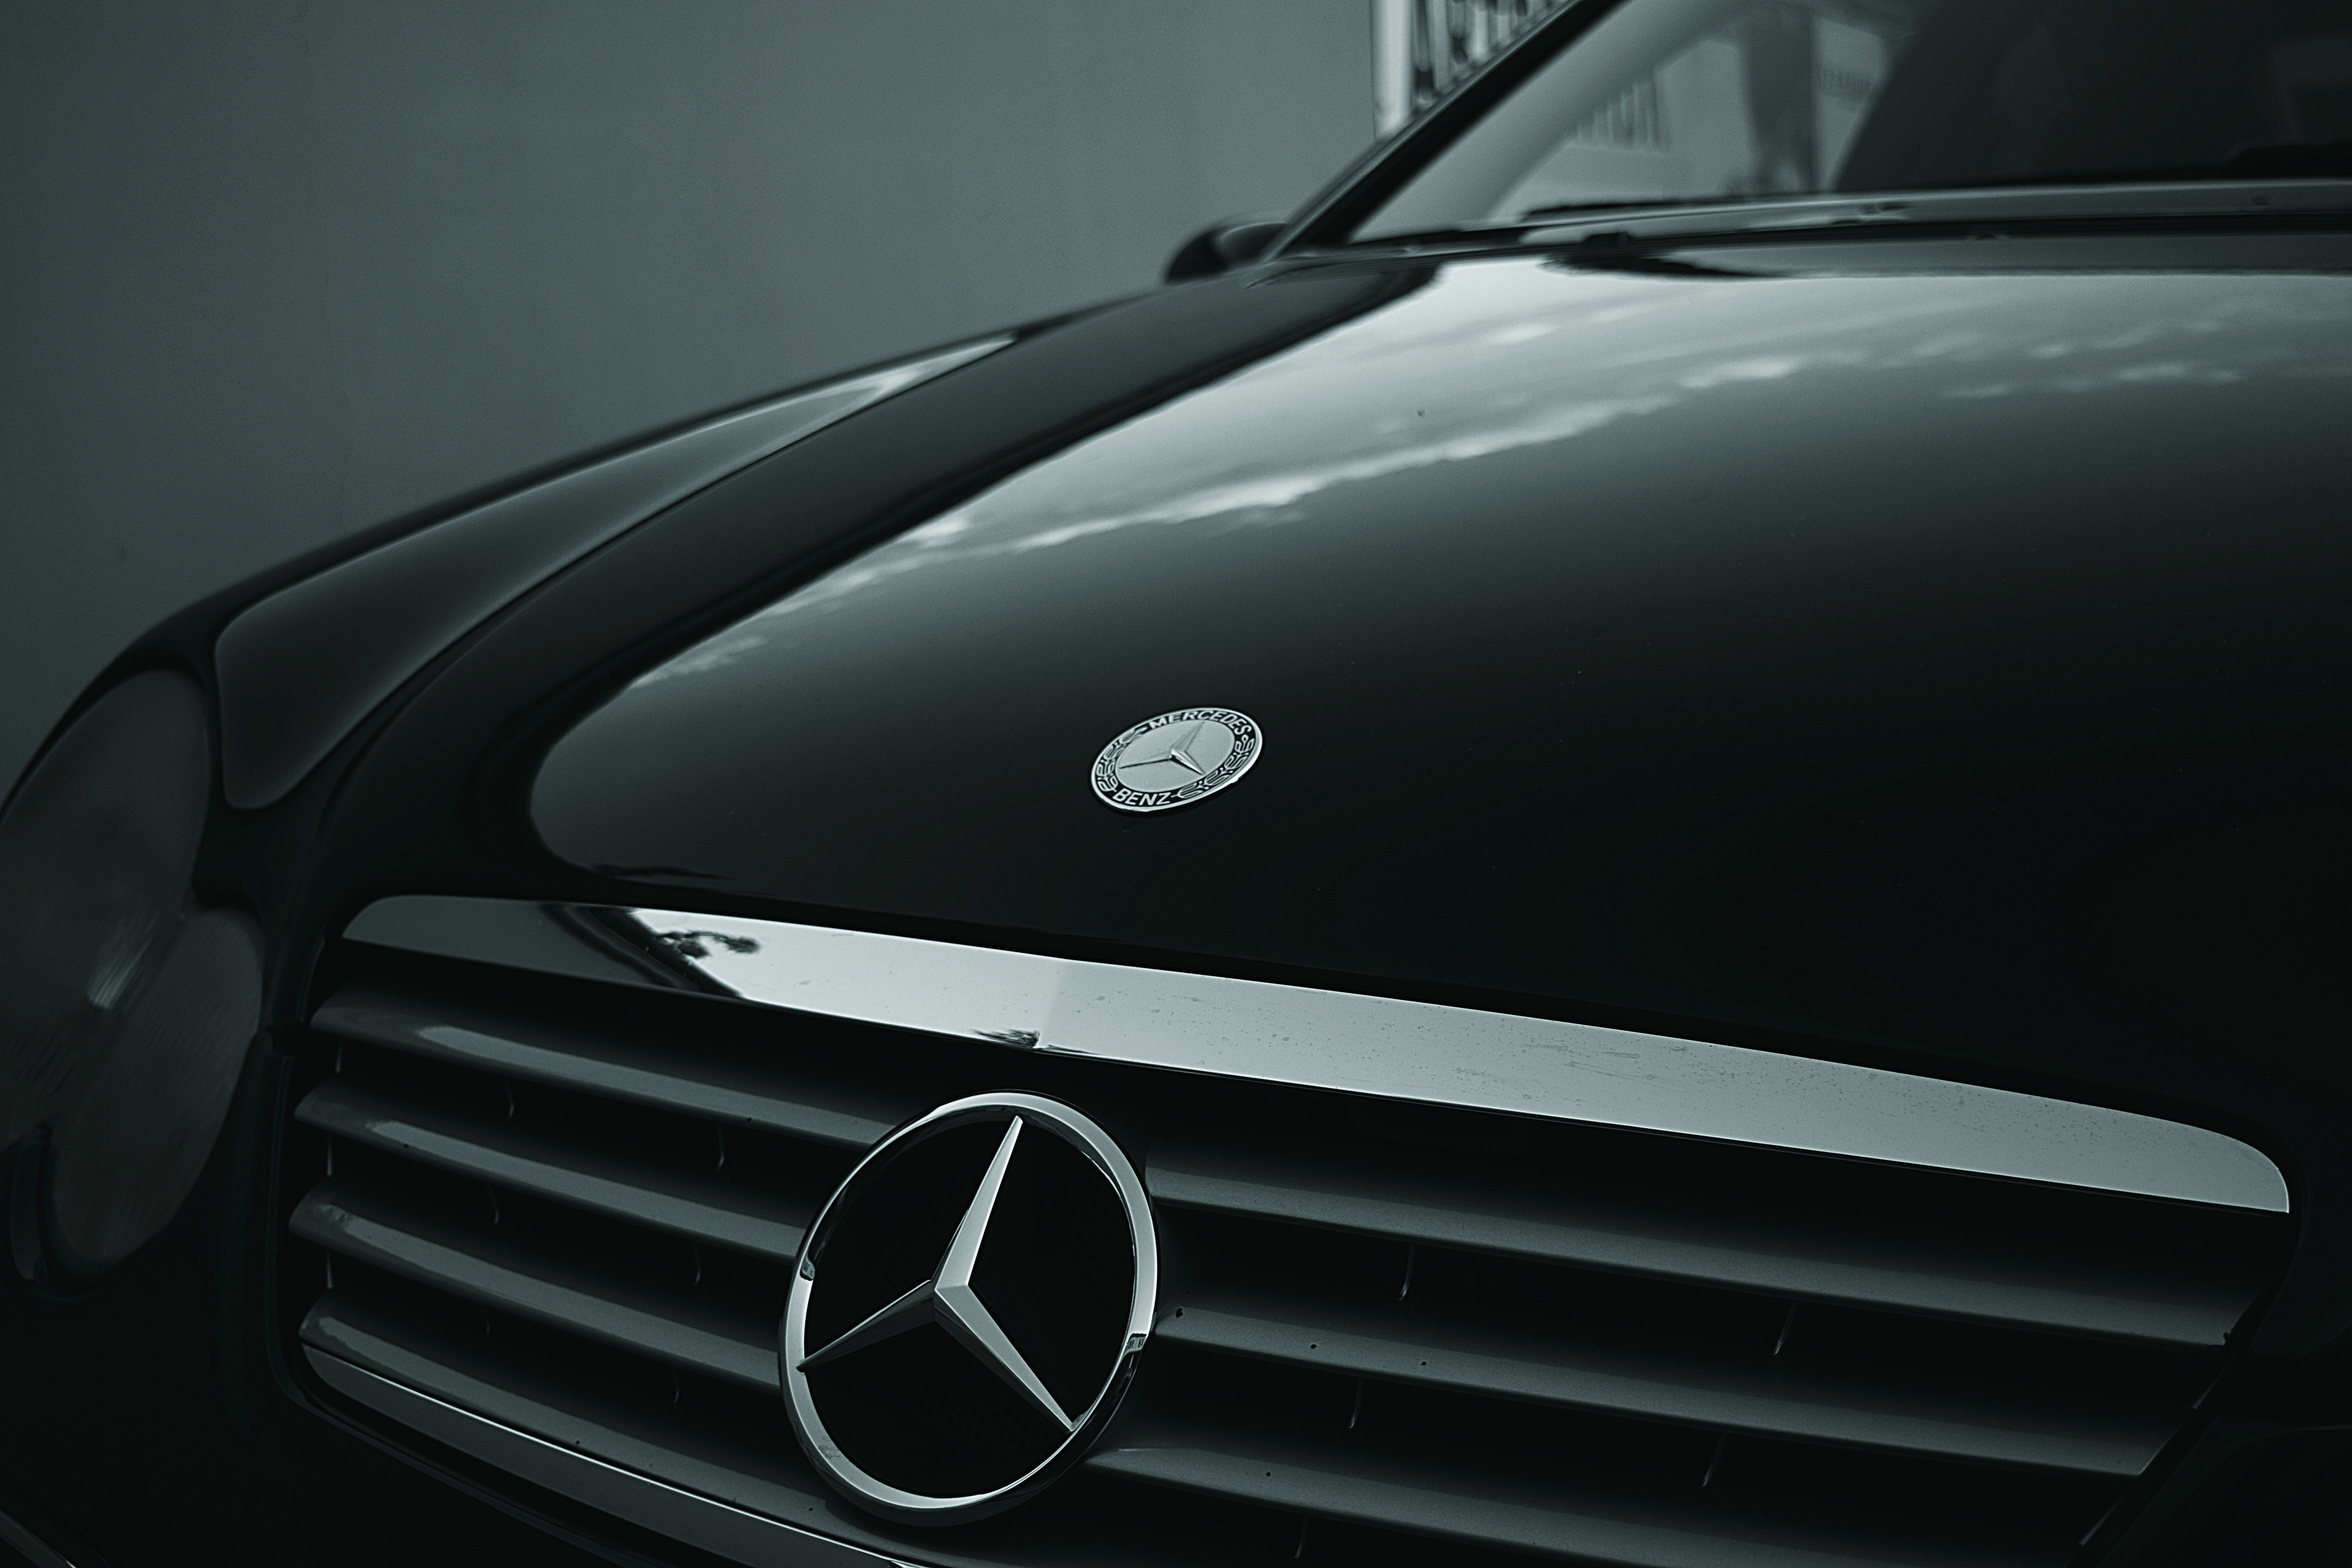 Mercedes Car Images Free Download